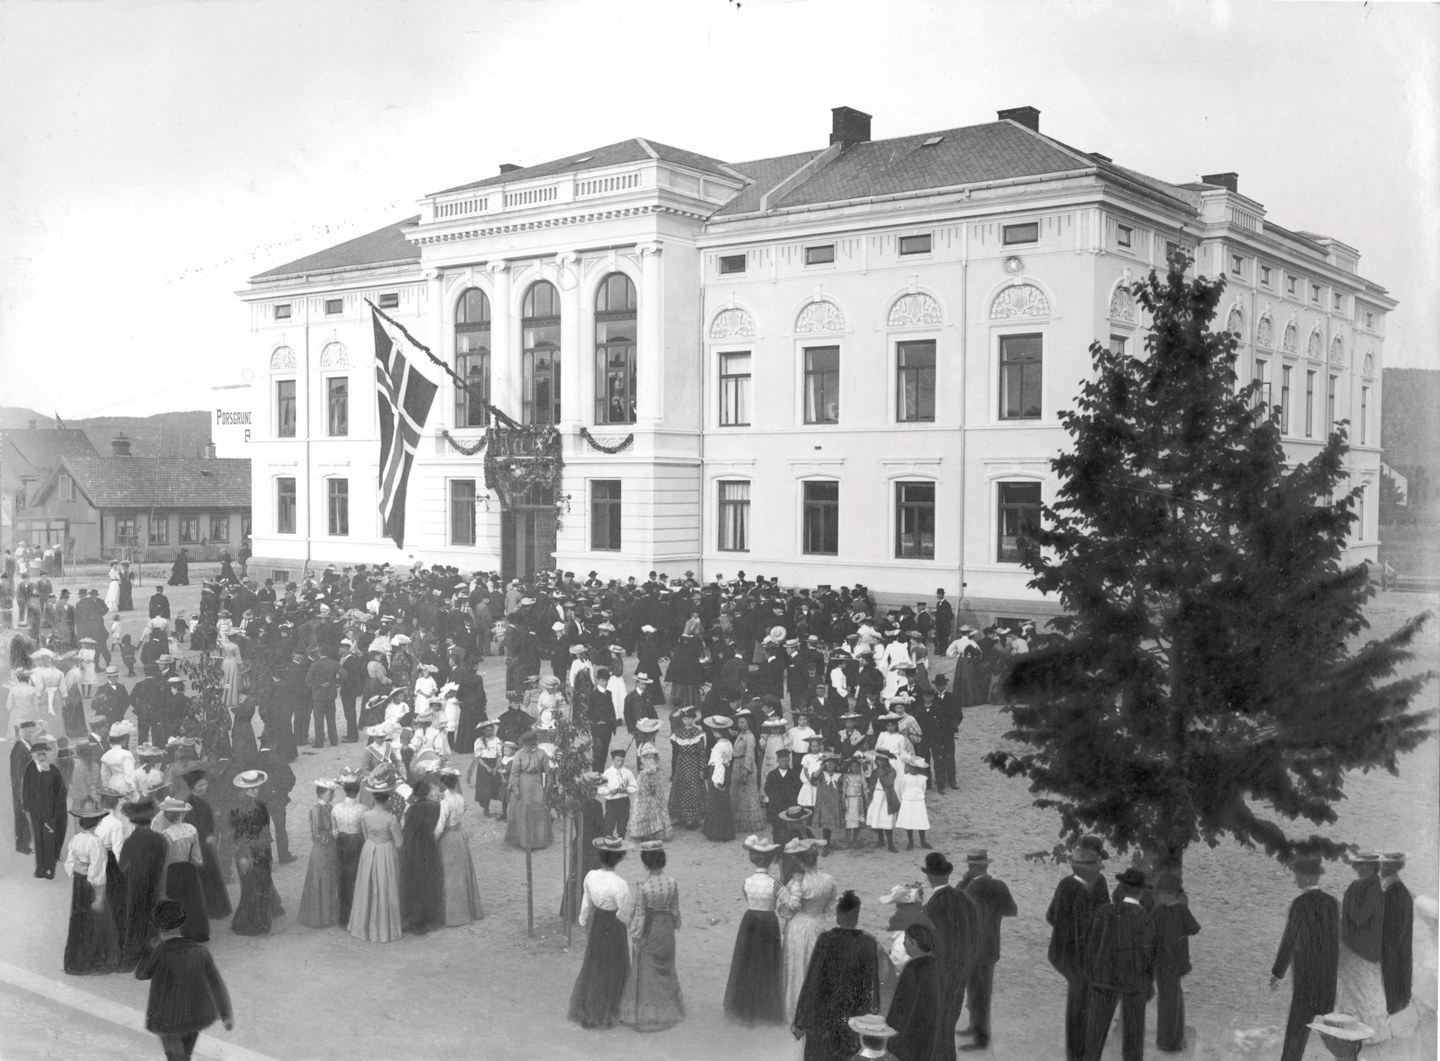 Rådhuset, i forbindelse med en markering for unionsoppløsningen i 1905. Det nye Rådhuset ble innviet samme år. Bygget erstatte den gamle Kammerherregården, som brant i 1901. Arkitekt er Haldor Larsen Børve.